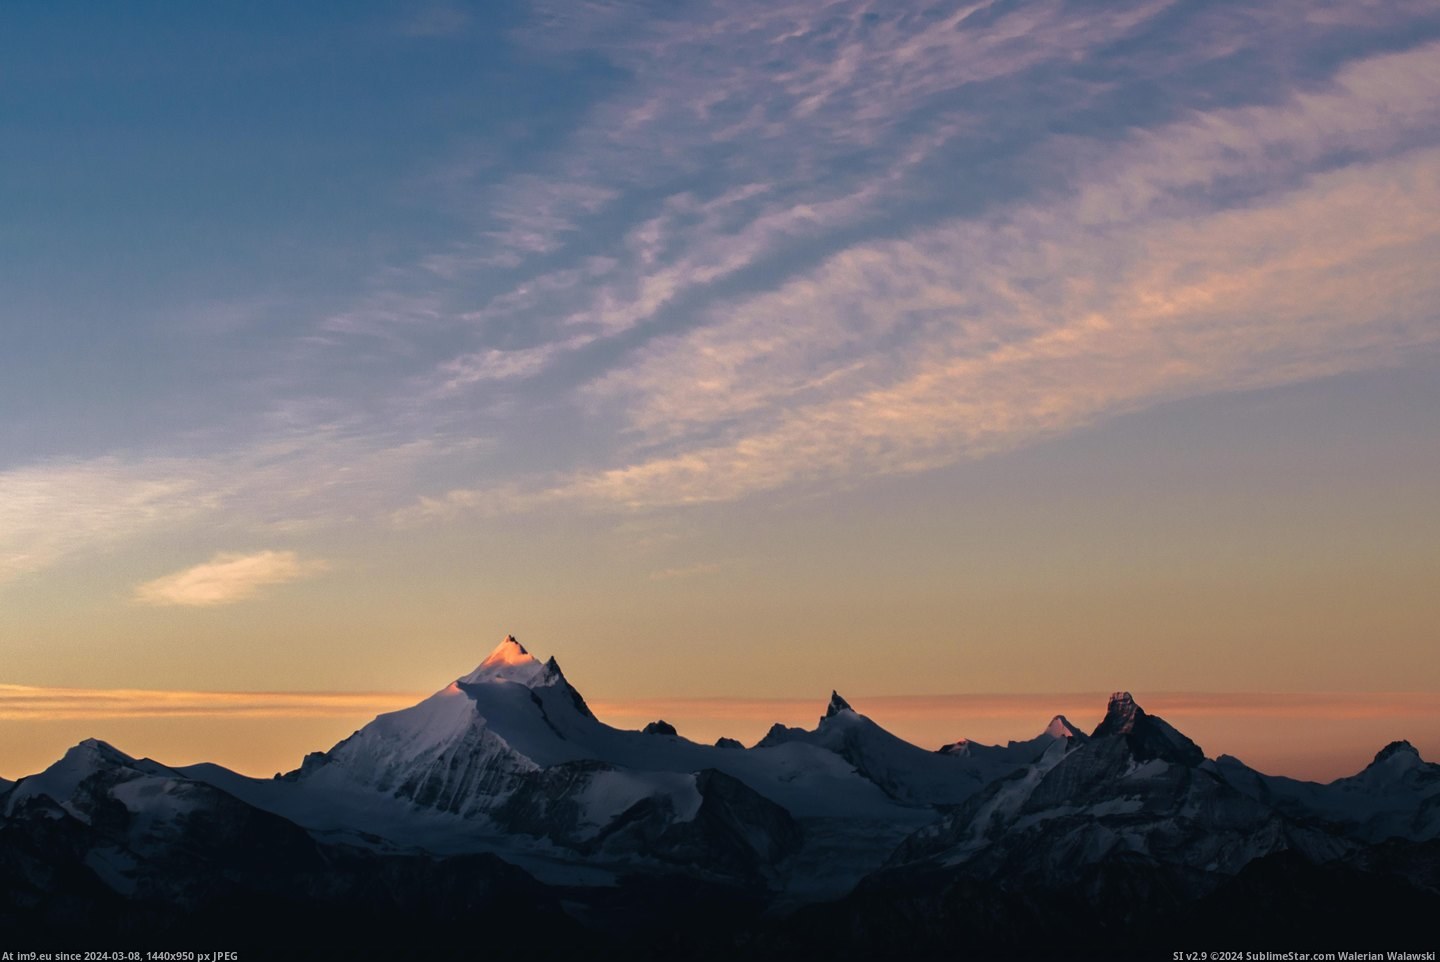 #Morning #Favourite #Mountain #Alps #Matterhorn #Hitting #Light #Bonus #Peak [Earthporn] The very first morning light hitting the peak of Weisshorn, my favourite mountain in the alps. Bonus: Matterhorn  [4 Pic. (Изображение из альбом My r/EARTHPORN favs))